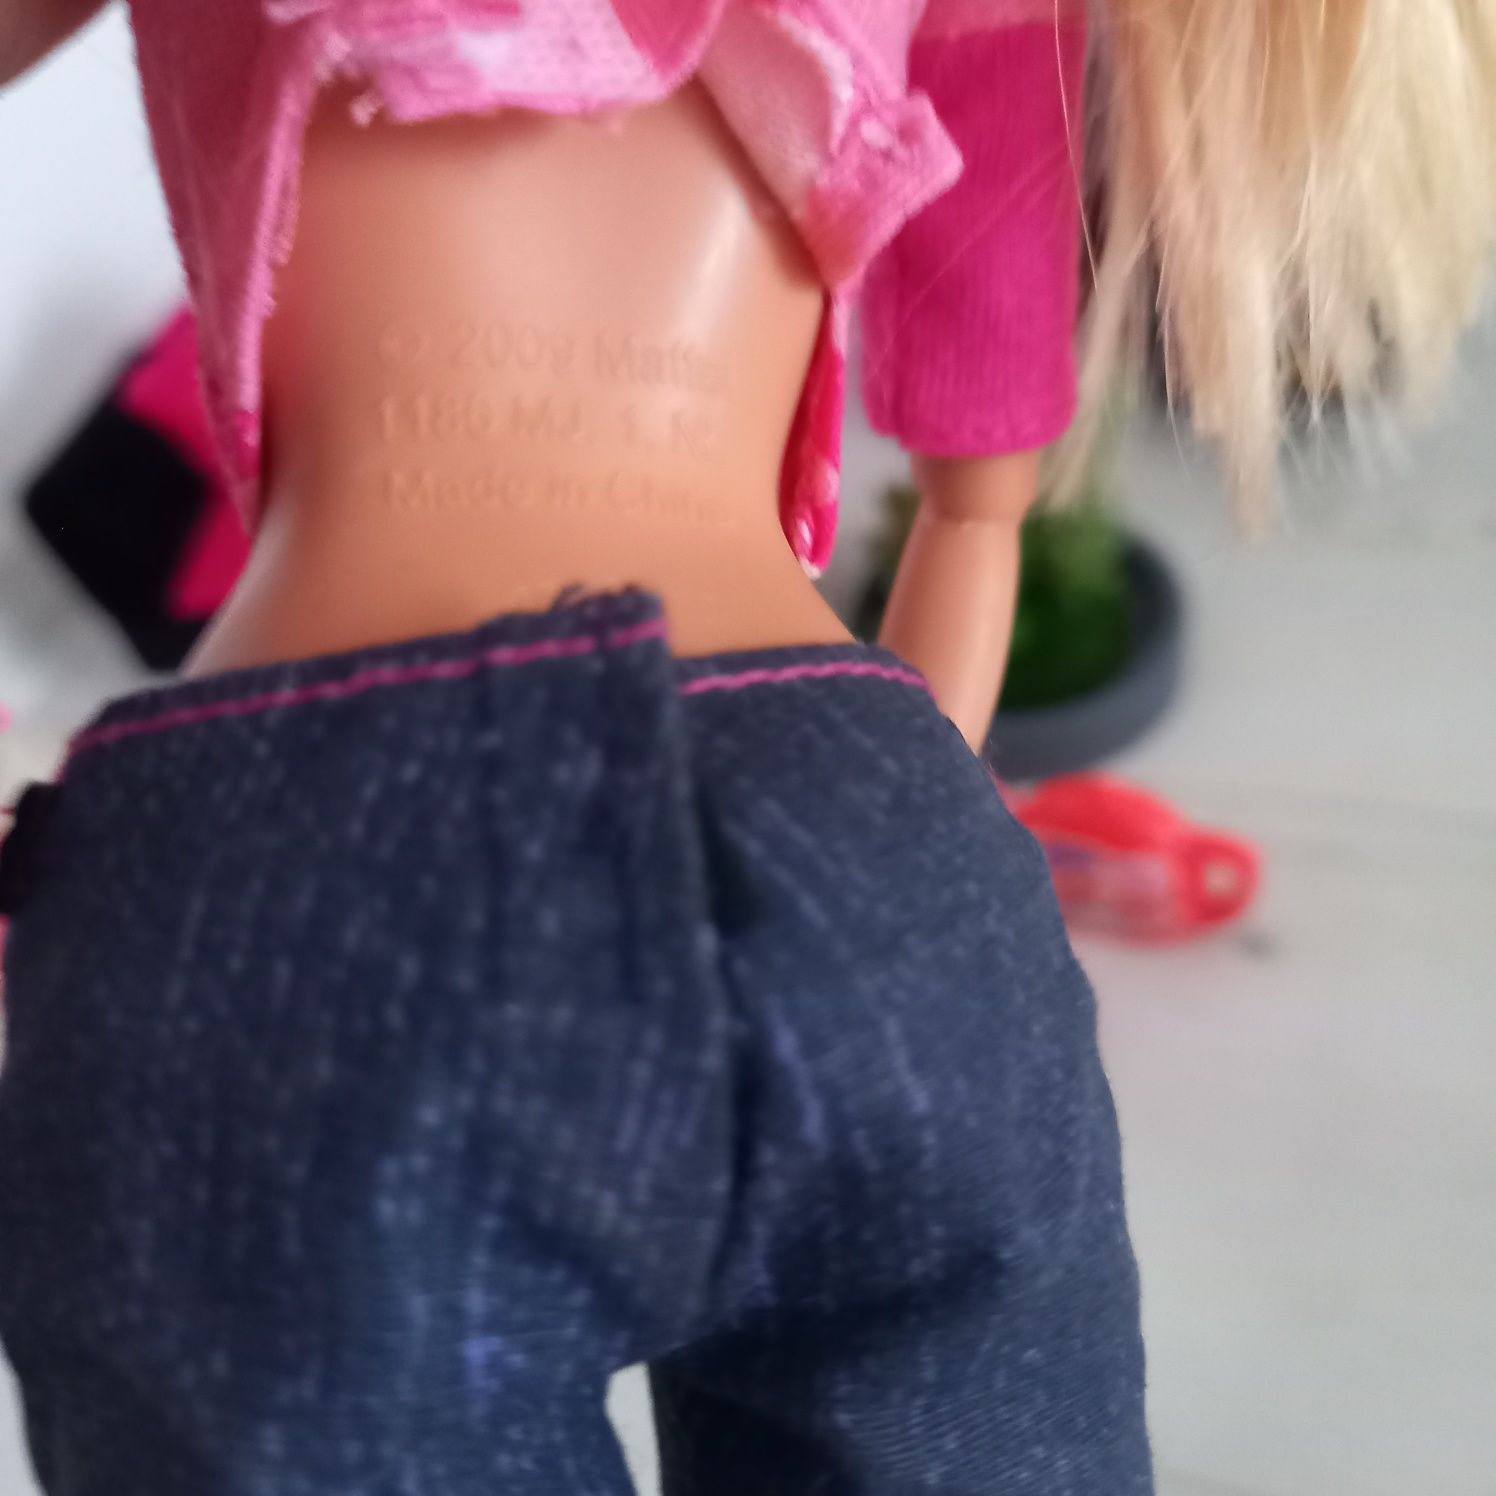 Unikat lalka Barbie z 2009 r. Mattel z numerem vintage blondynka